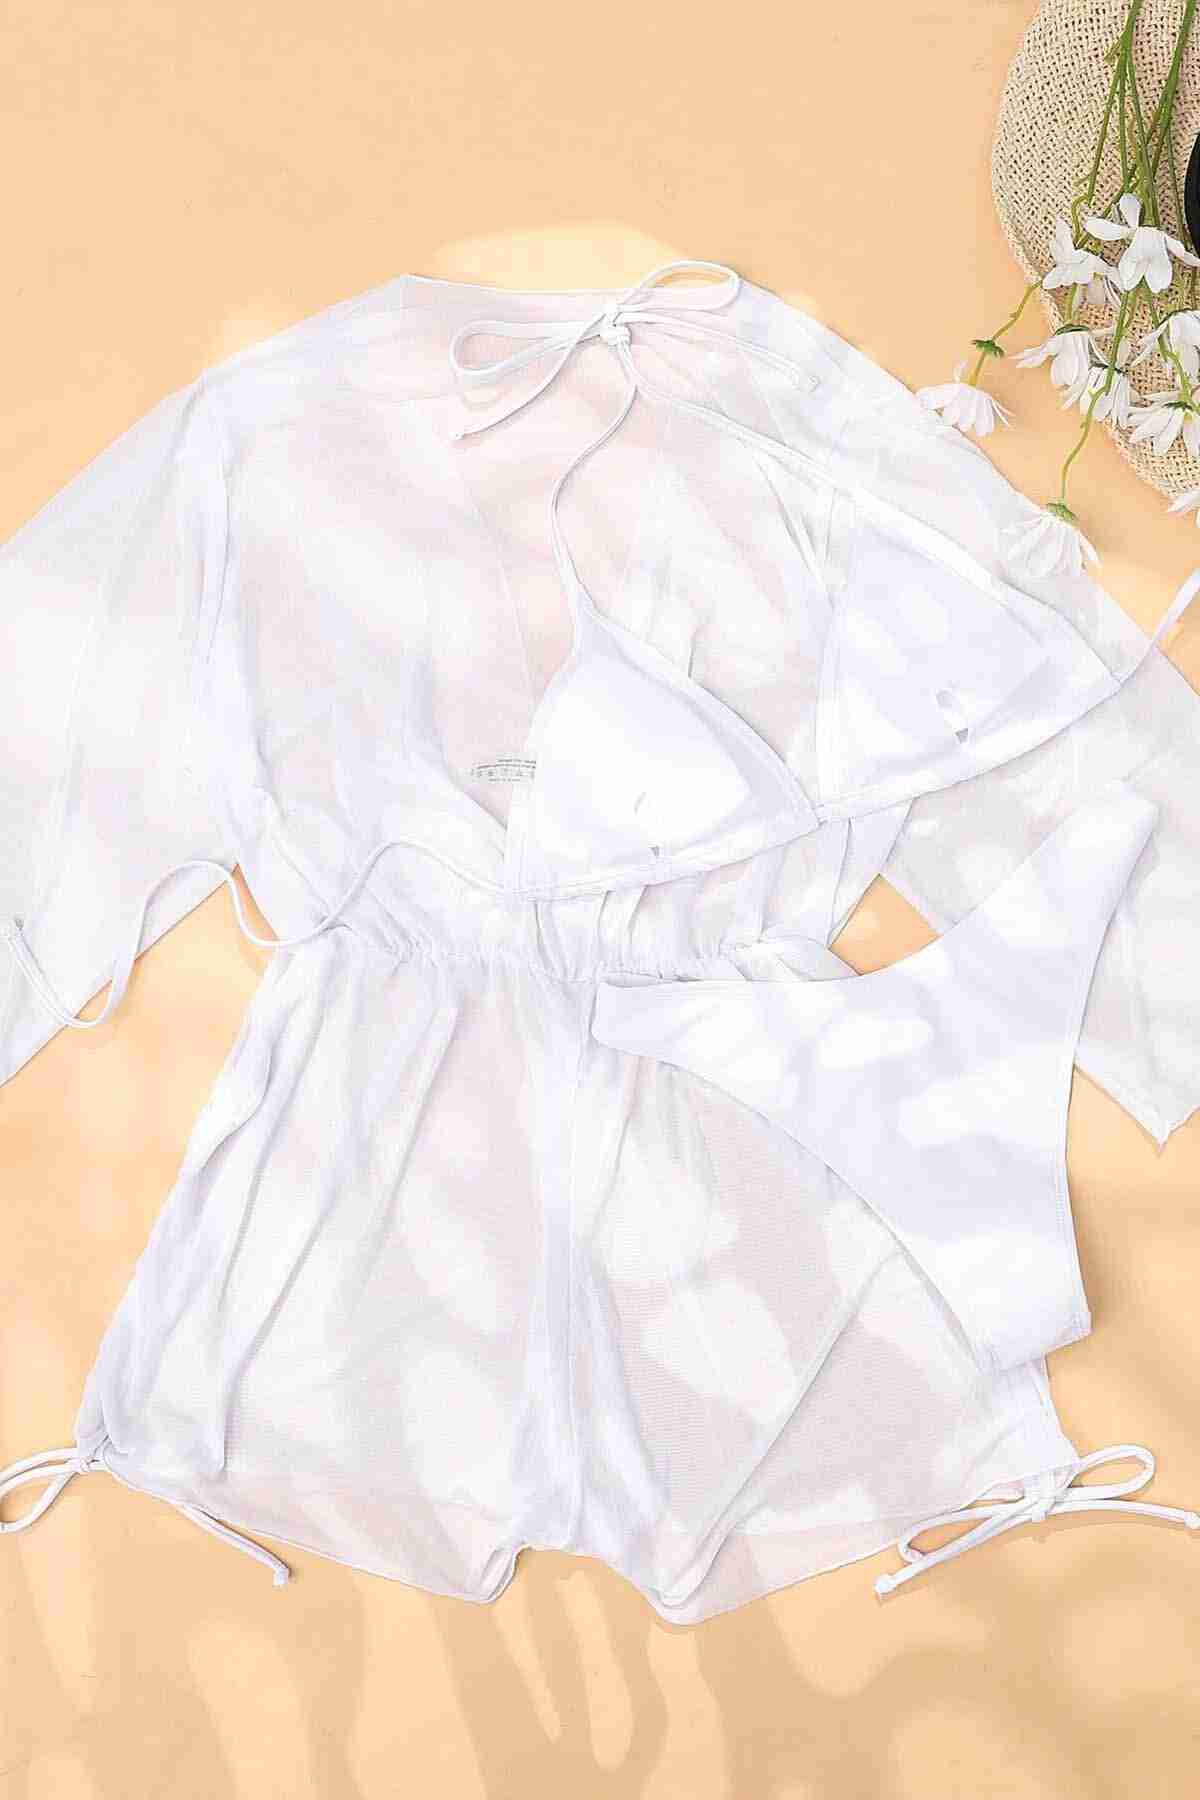 angelsin tul pareo plaj elbesi cover up kimono beyaz plaj elbiseleri pareo angelsin 15591 42 B